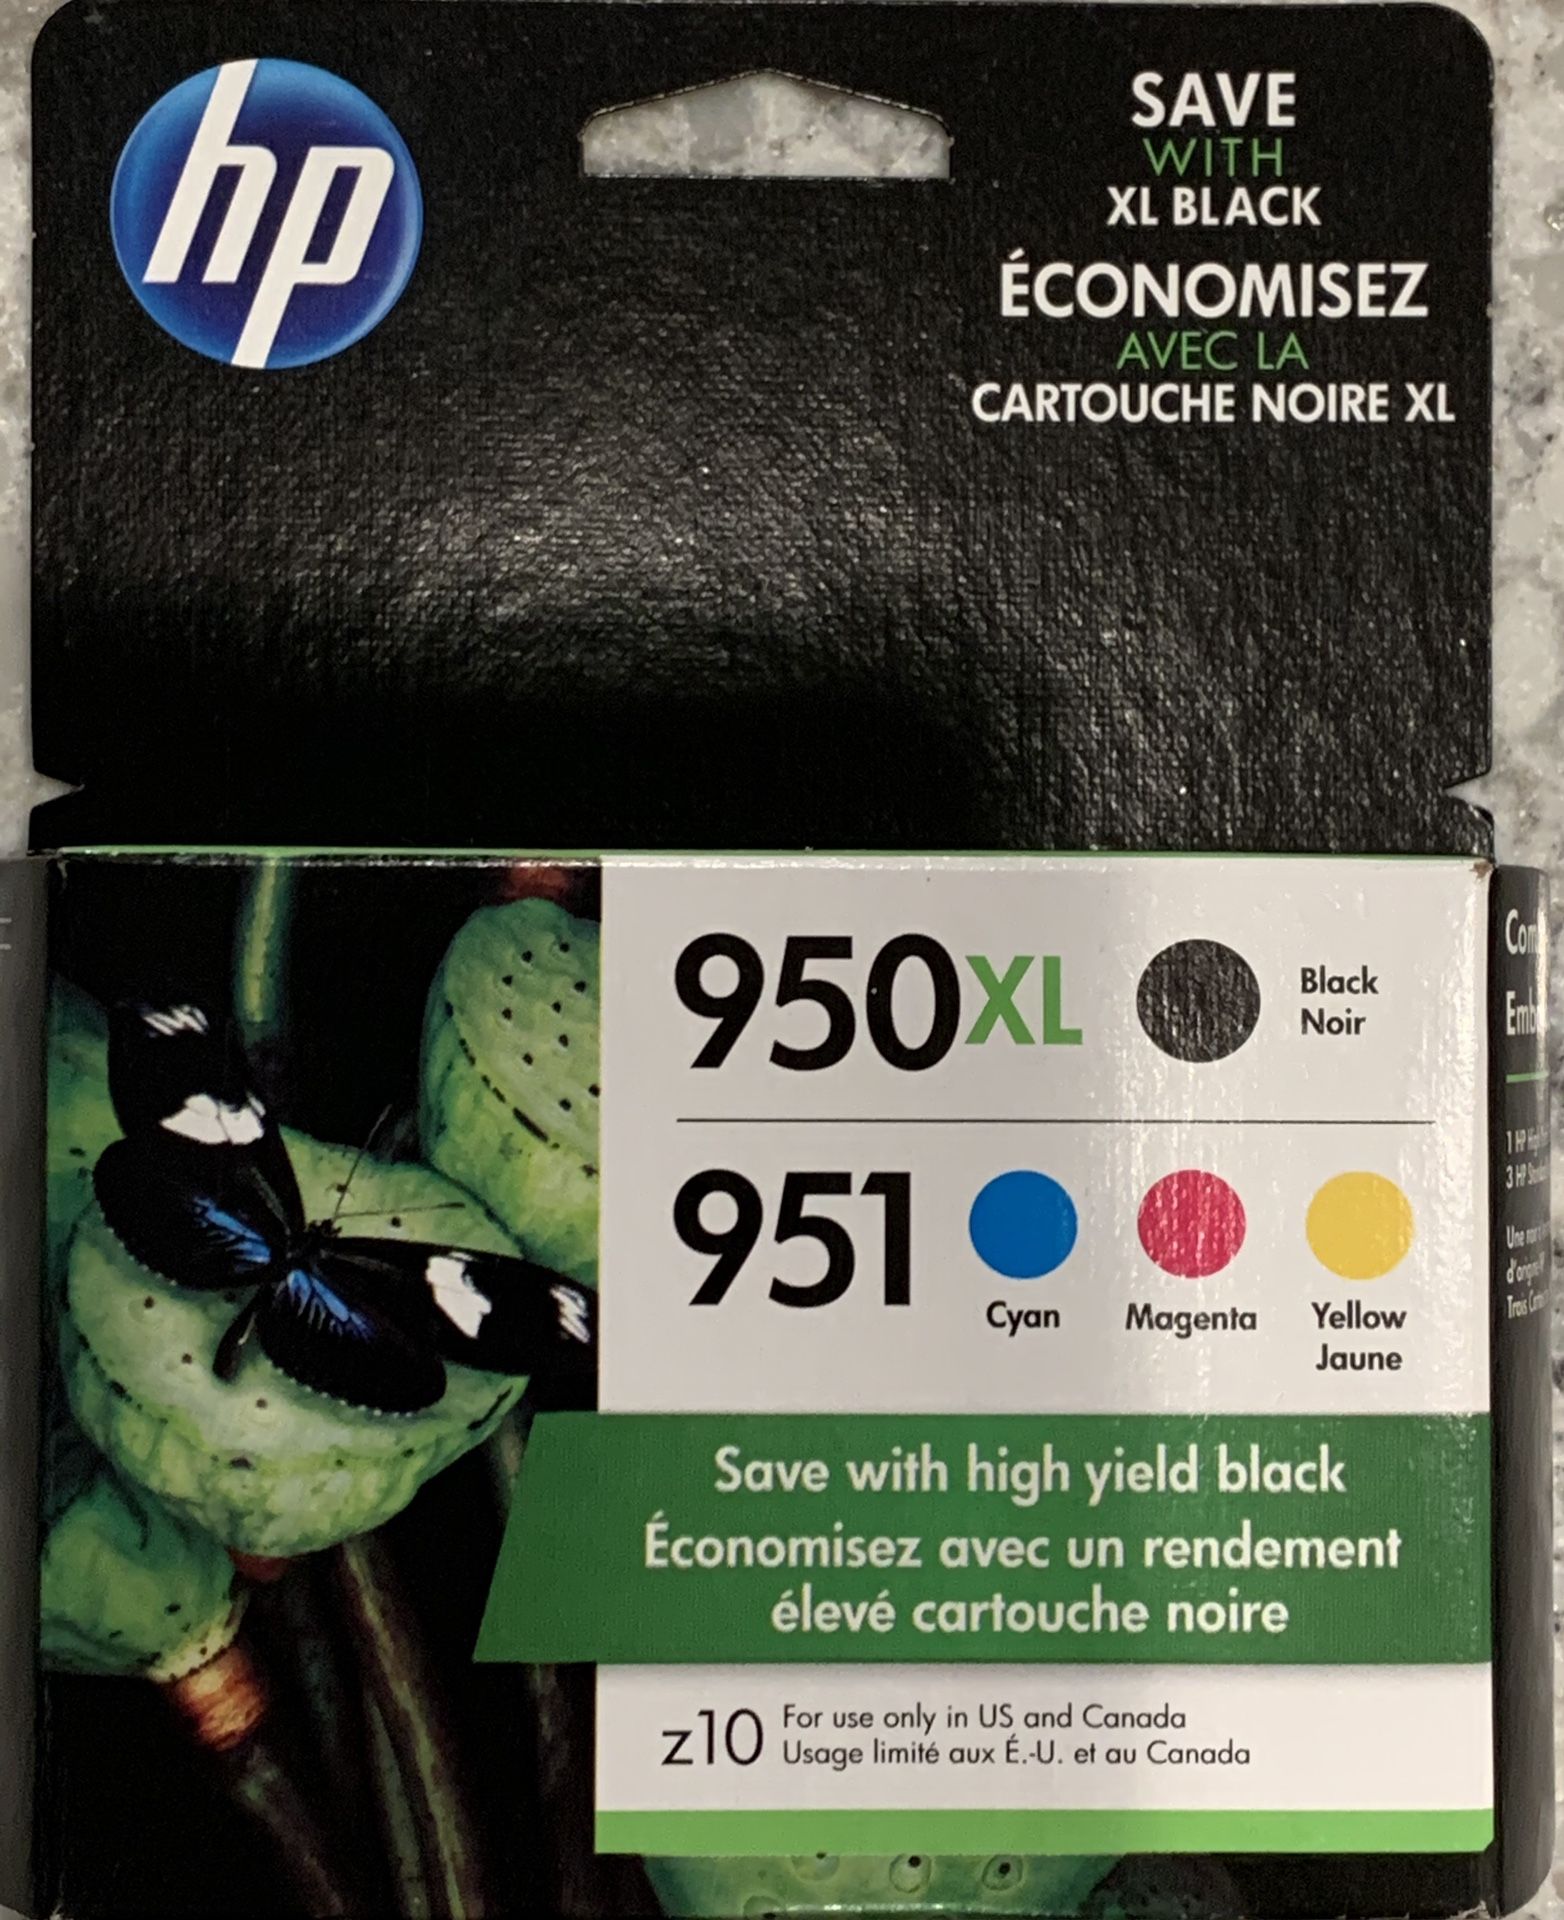 HP 950XL/950 printer cartridges. Brand new never opened